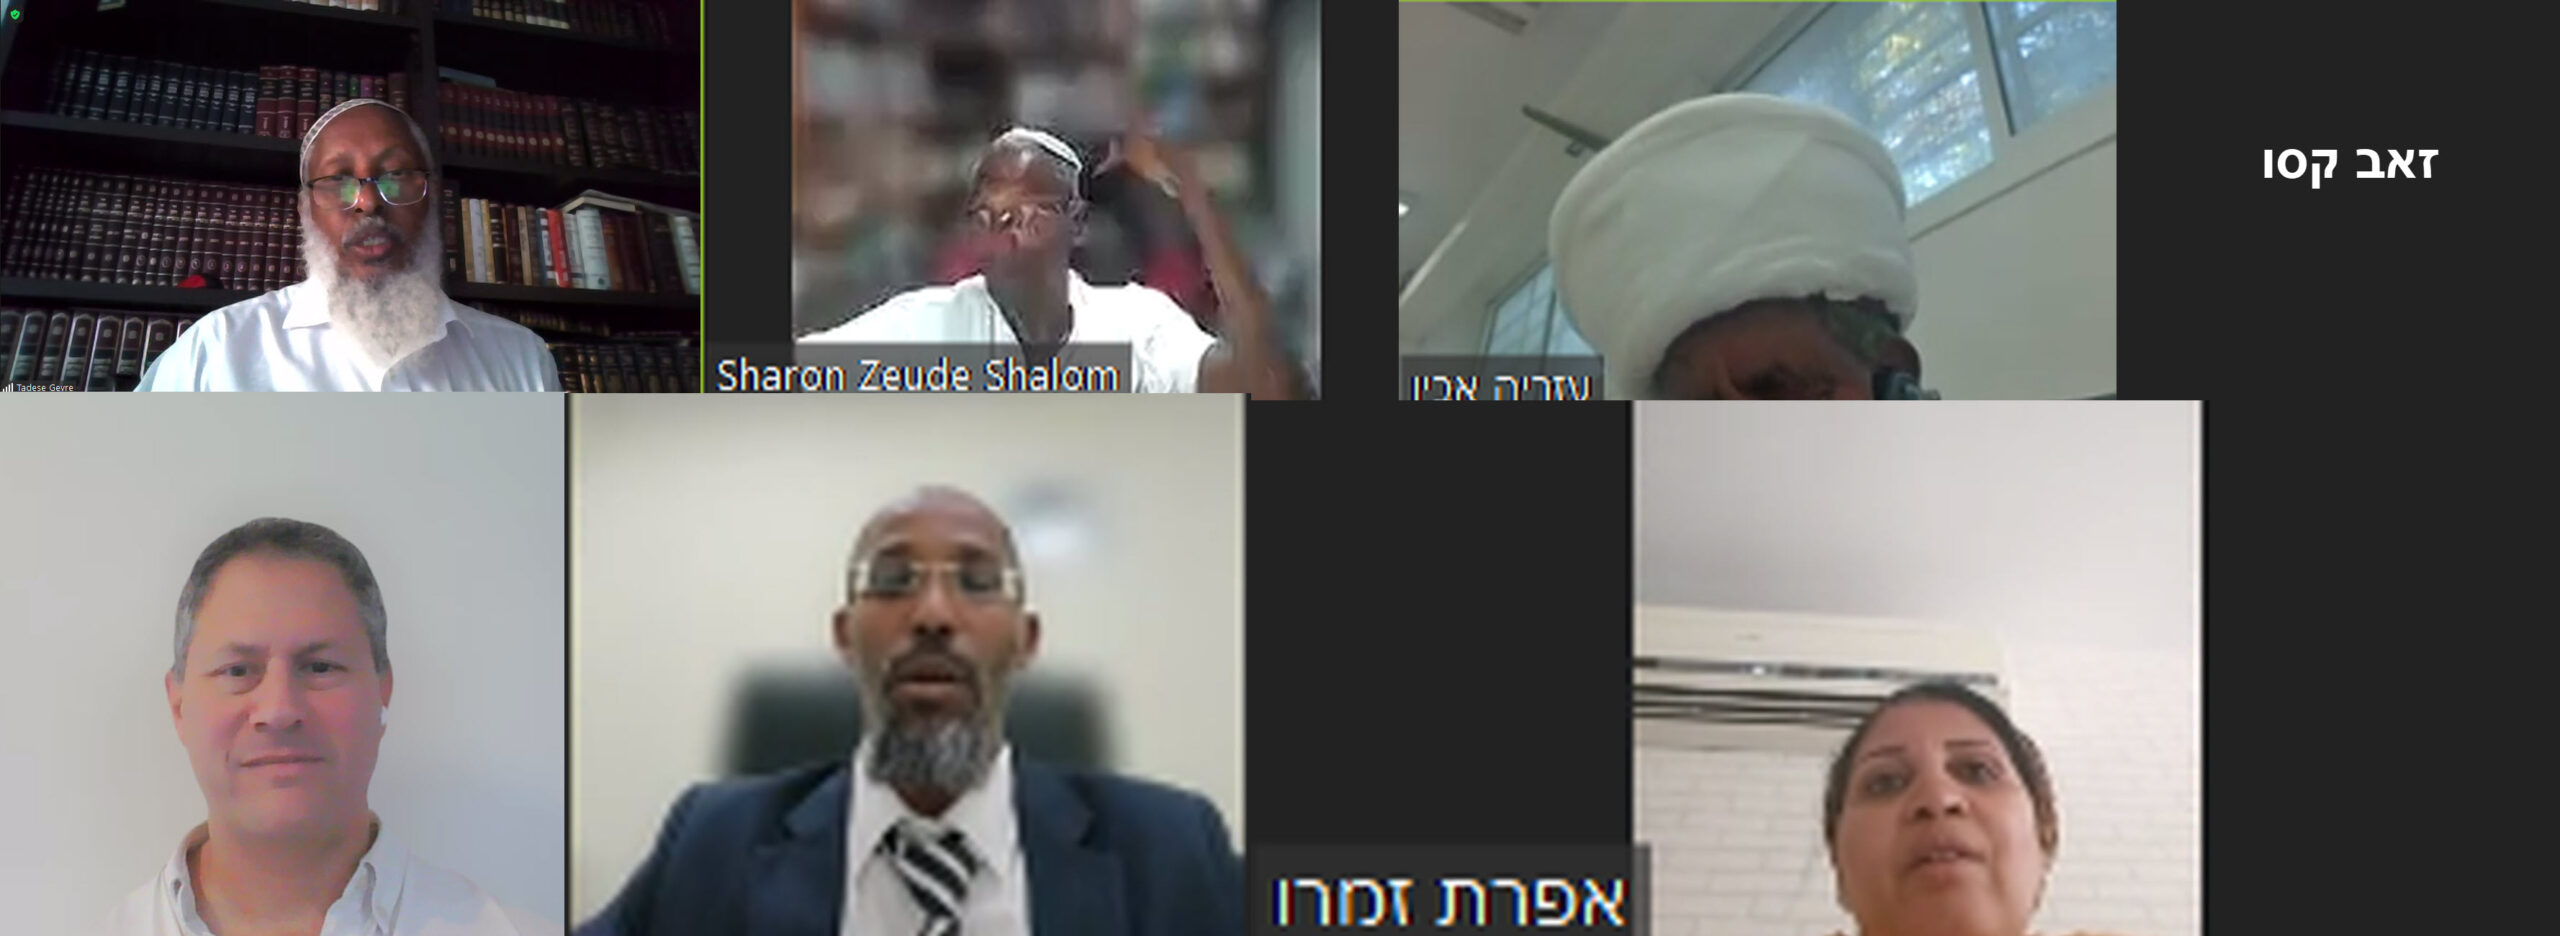 Zoom meeting of UJA Project to reduce Ethiopian Israeli Community Tensions